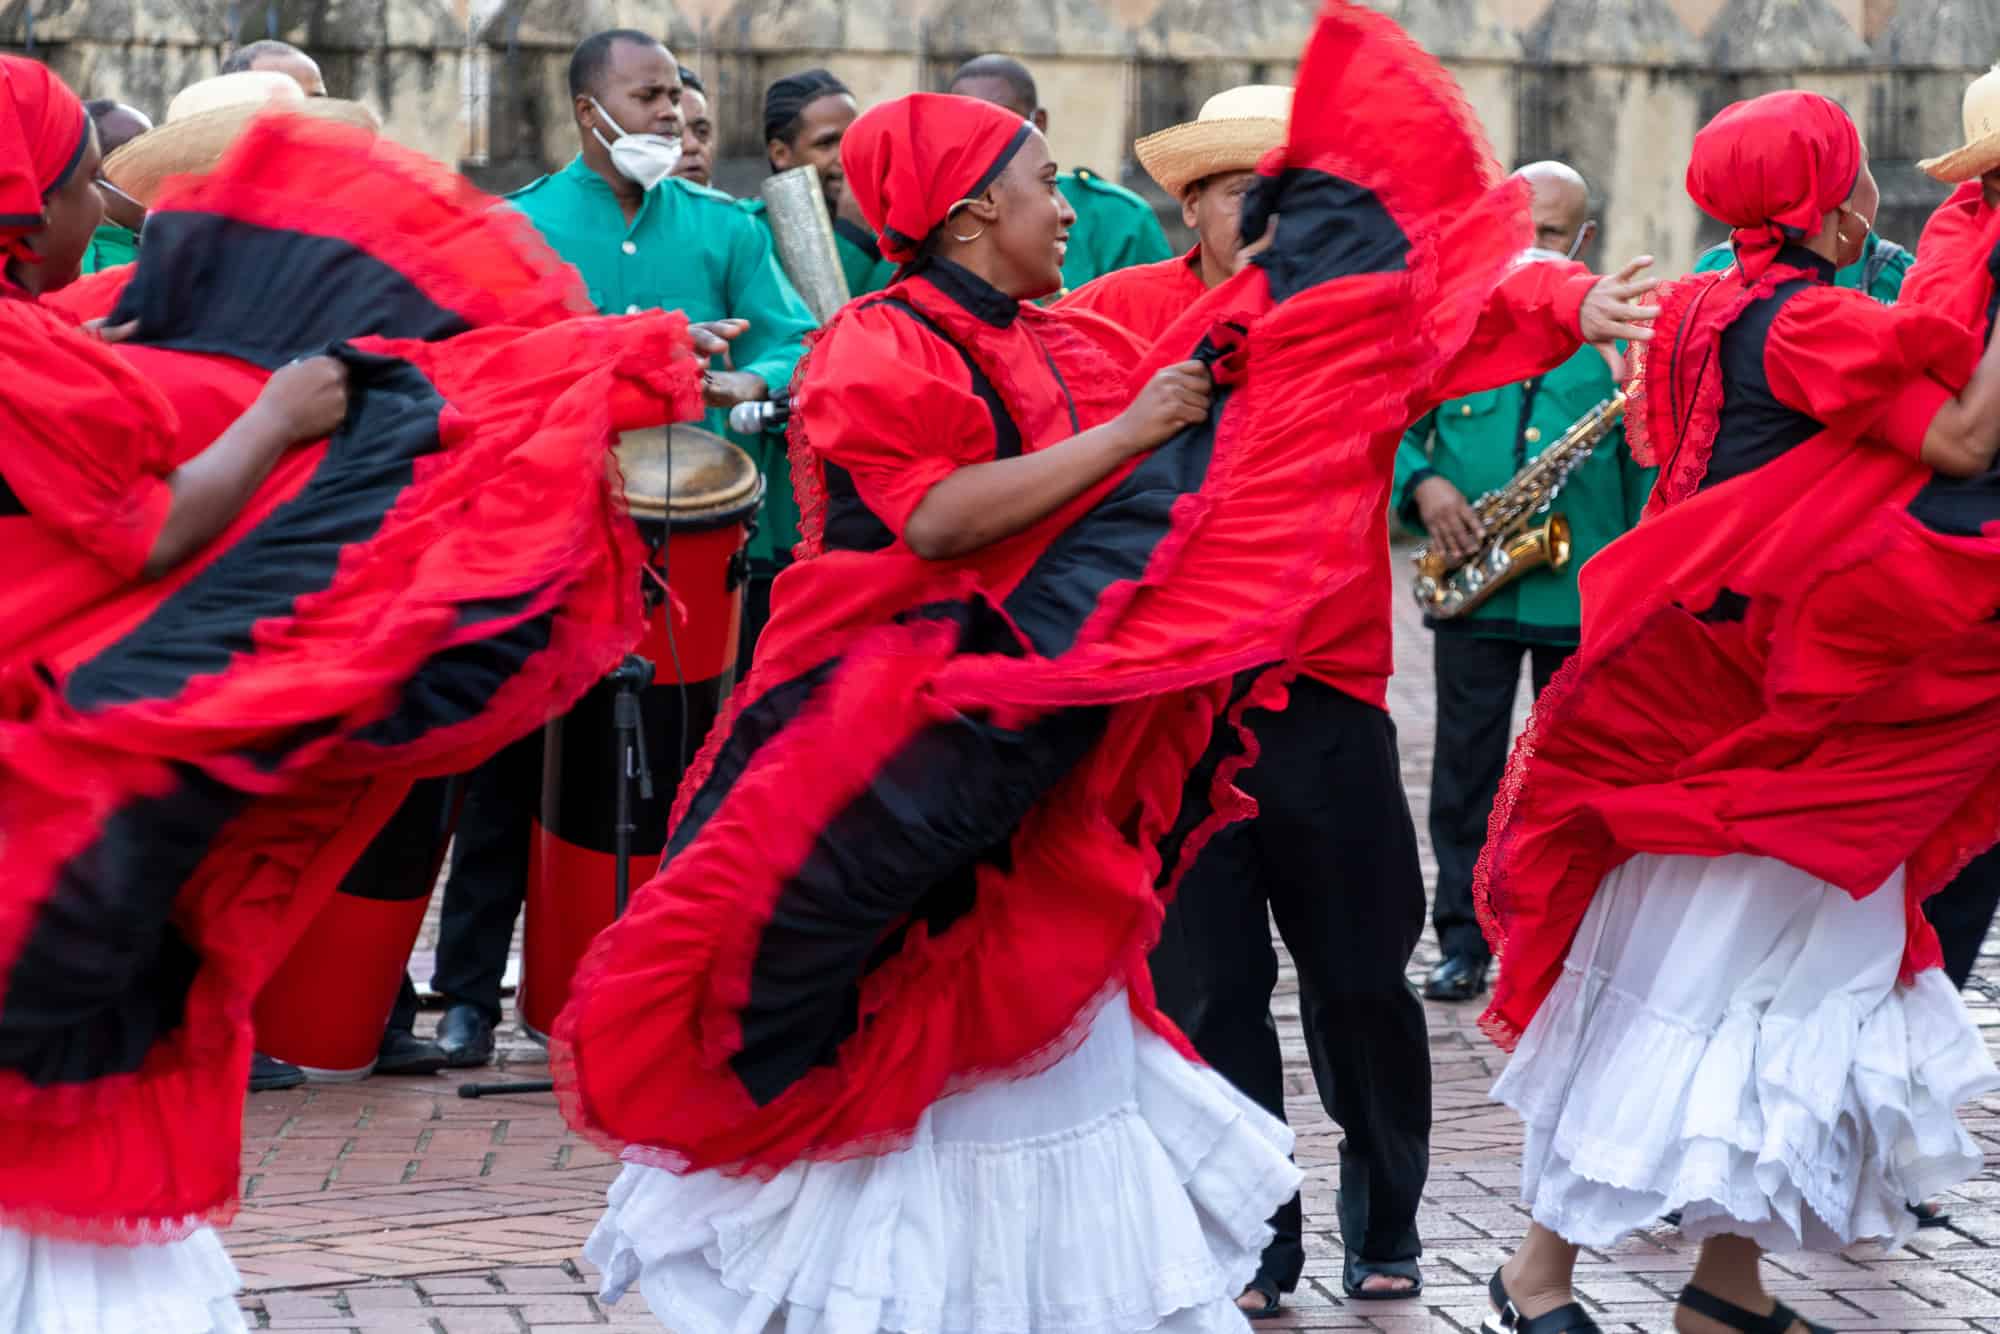 Caribbean - Dominican Republic - Hyatt Ziva Cap Cana - what to wear in the Dominican Republic - Scarlet merengue dancers